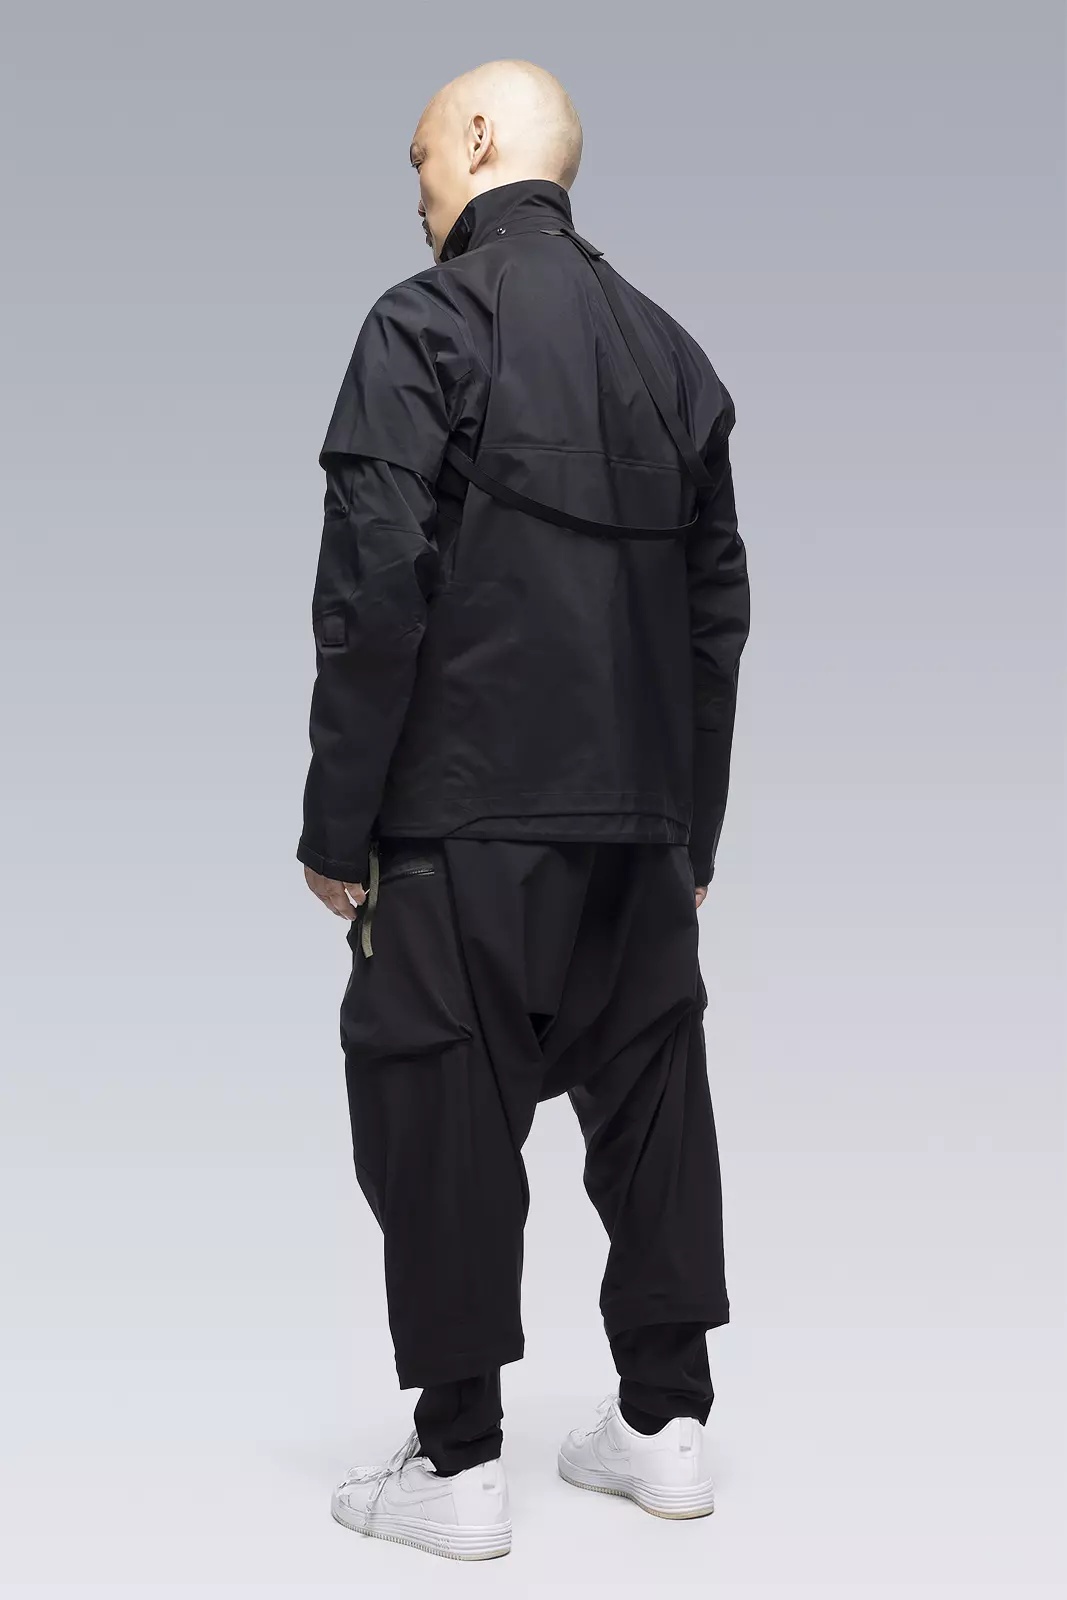 J1A-GTKR-BKS KR EX 3L Gore-Tex® Pro Interops Jacket Black with size 5 WR zippers in gloss black - 5